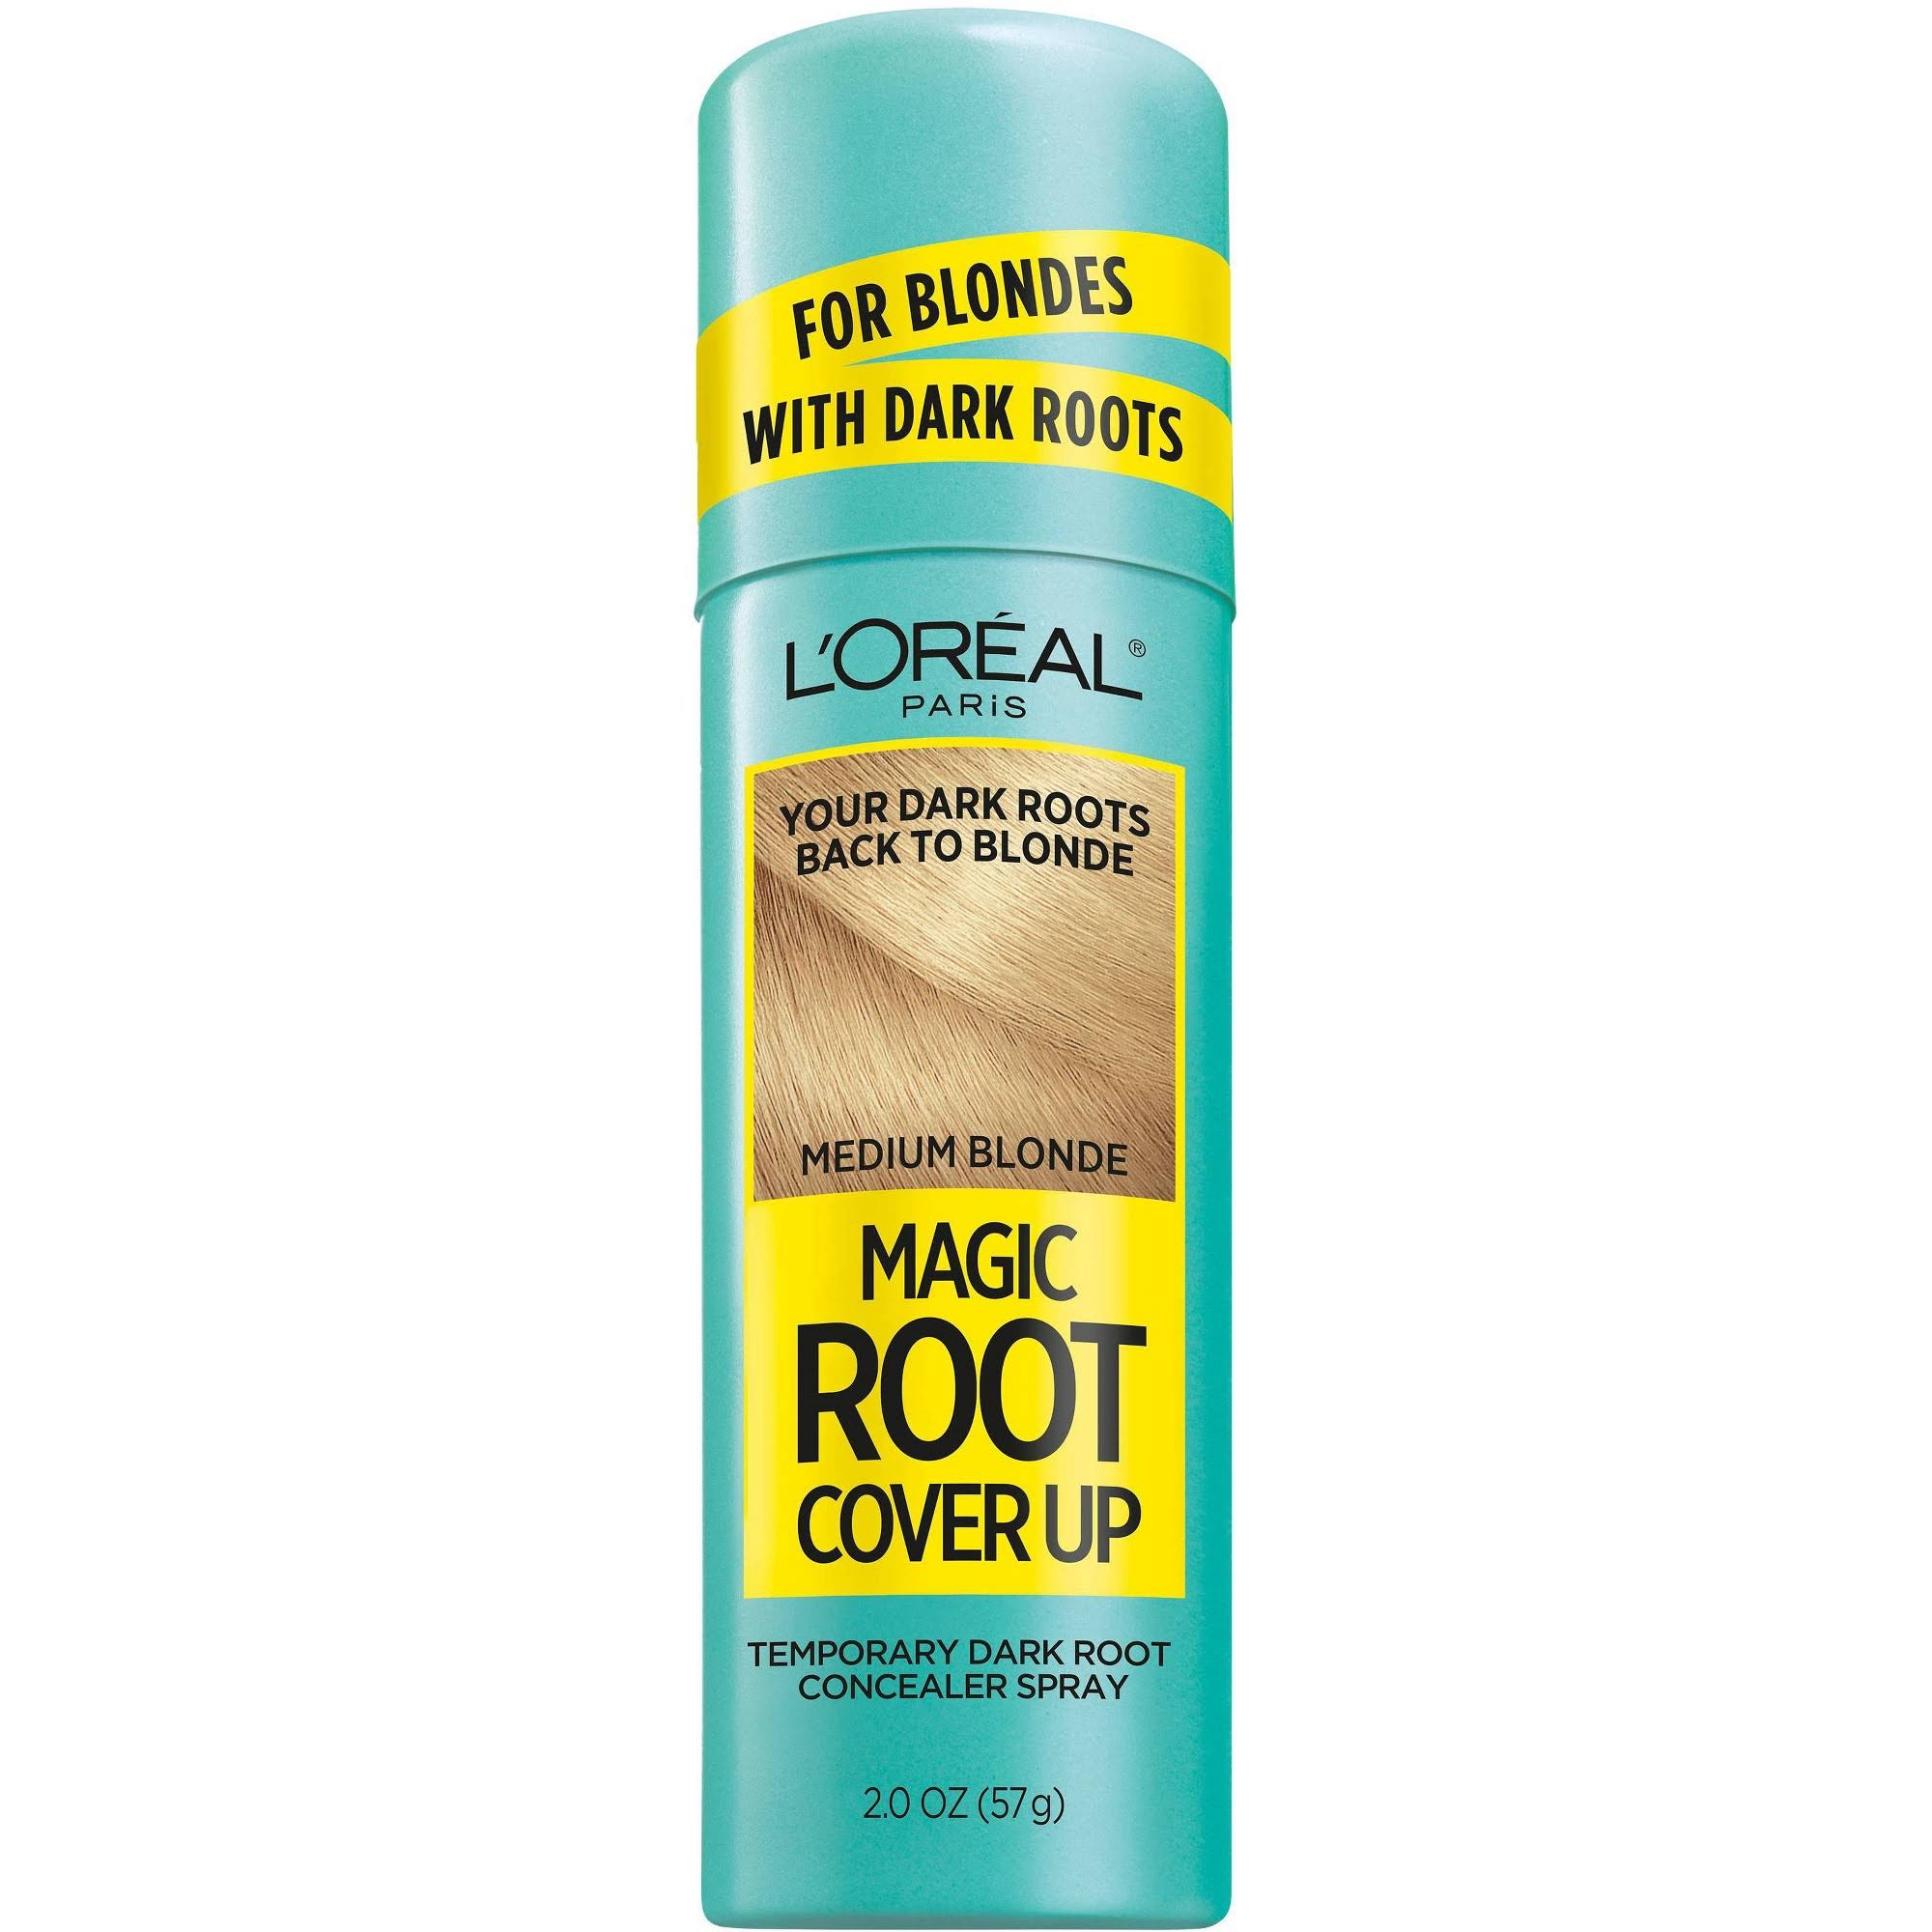 L'oreal Paris Magic Root Cover Up Temporary Dark Root Concealer Spray, Medium Blonde